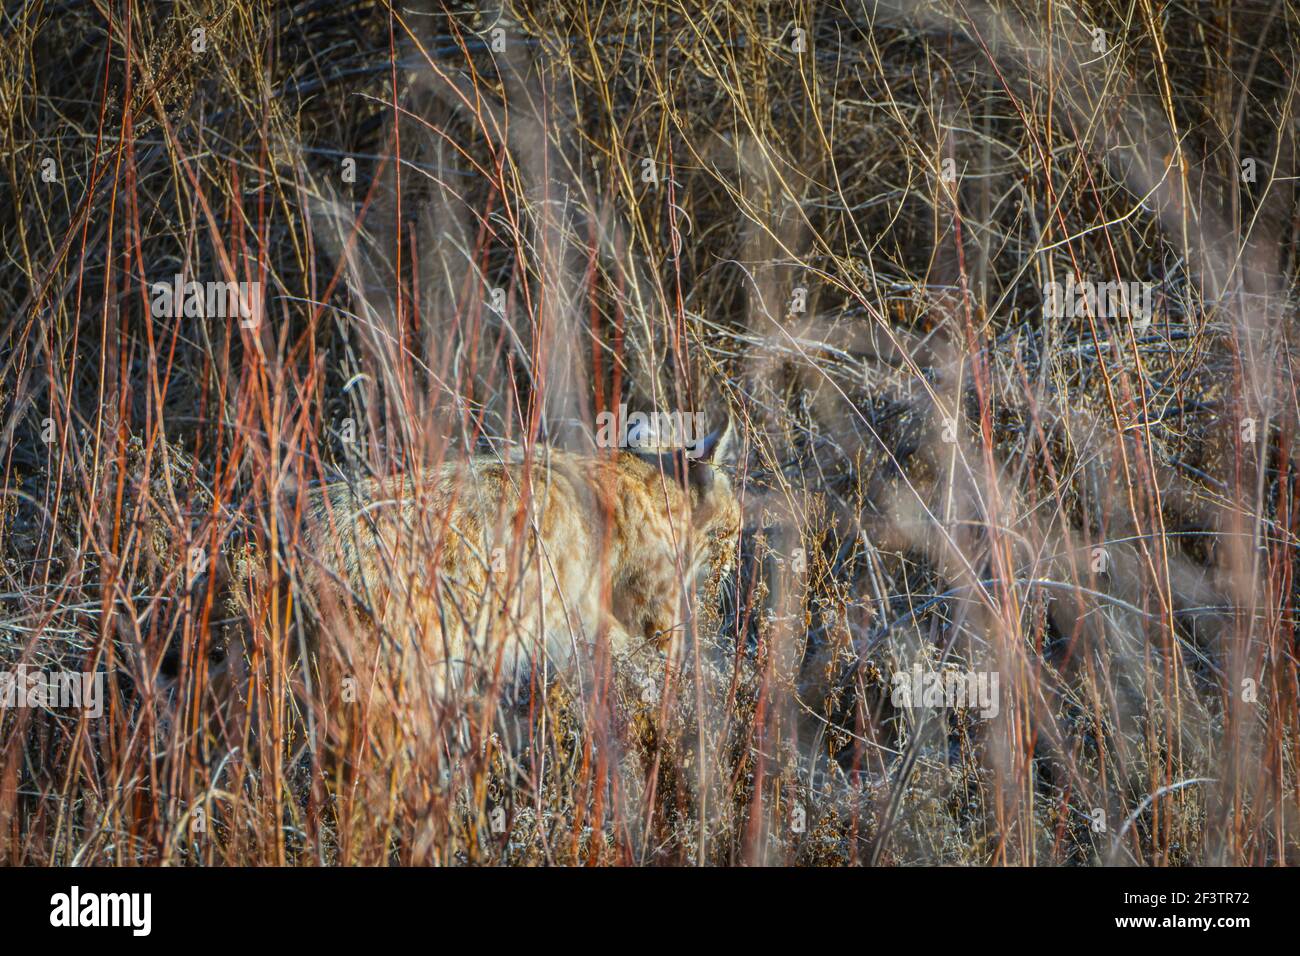 In morning light, a Bobcat (Lynx rufus) hunts through brush & Narrowleaf Willows (Salix exigua) in Sellar's Gulch area of Castle Rock Colorado USA. Stock Photo